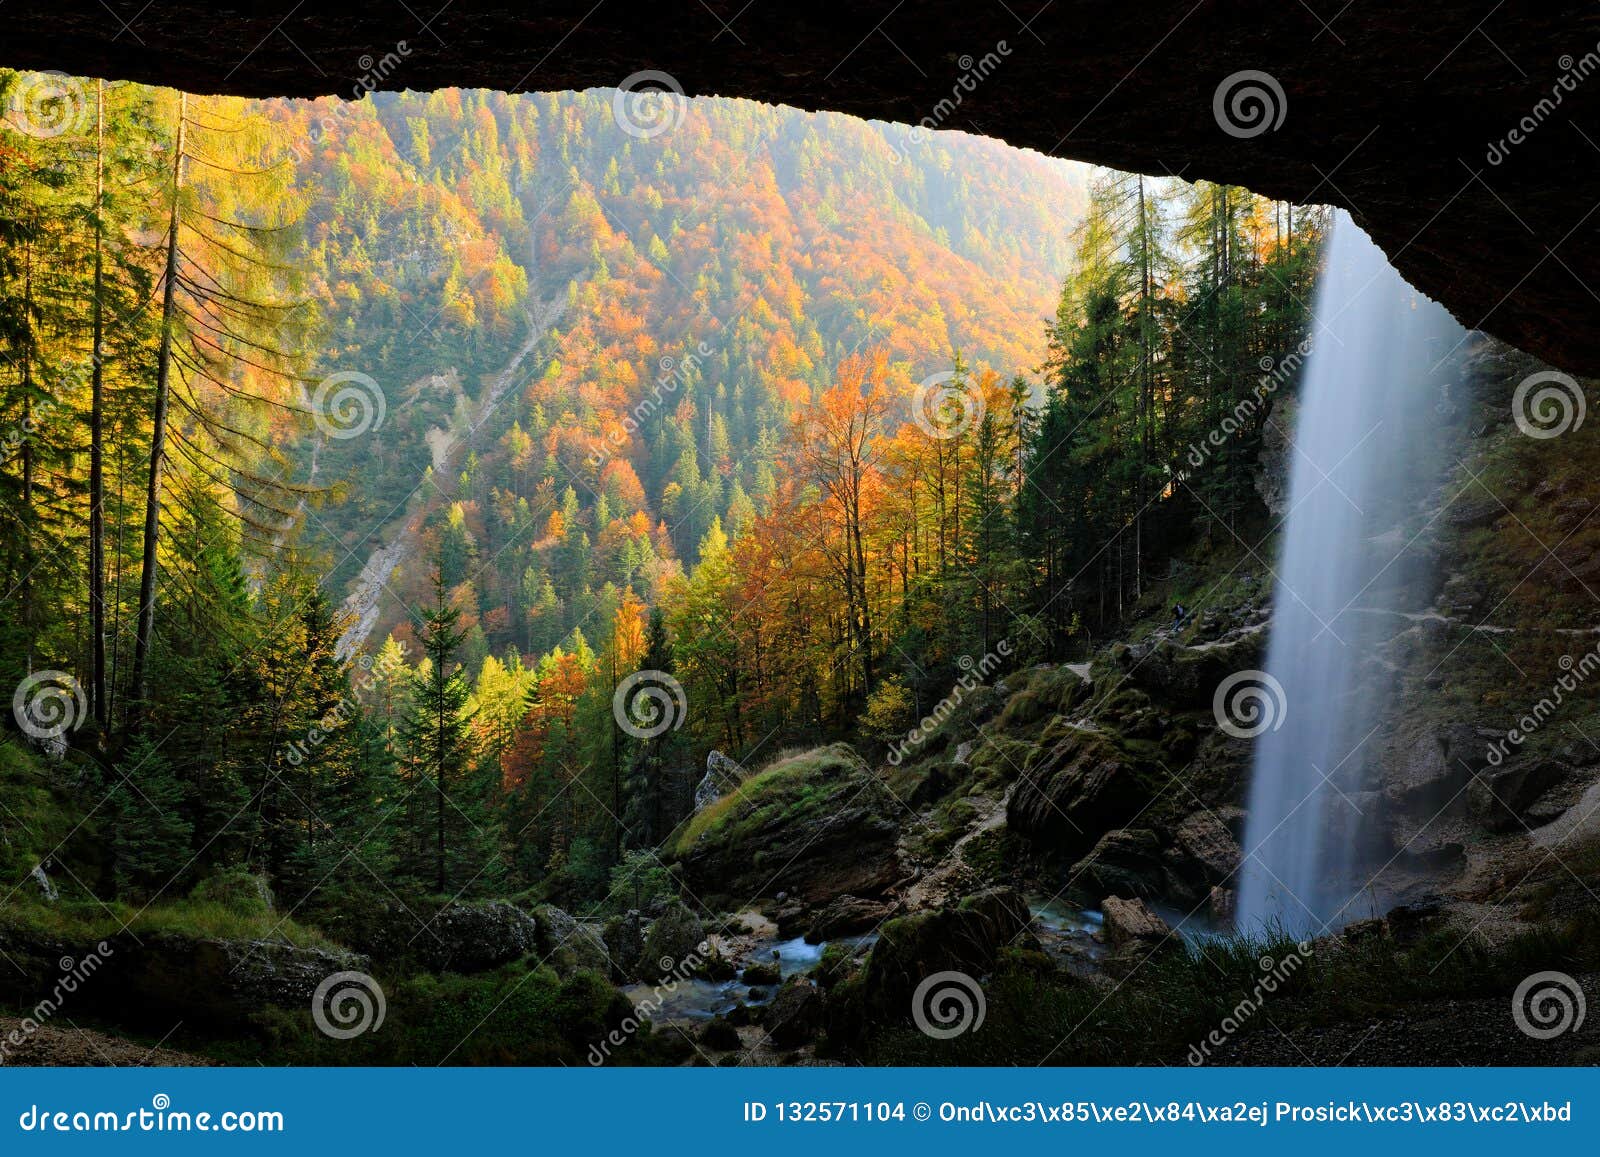 pericnik falls, waterfall with orange tree in triglav national park, slovenia. landscape in nature europe. foggy triglav alps